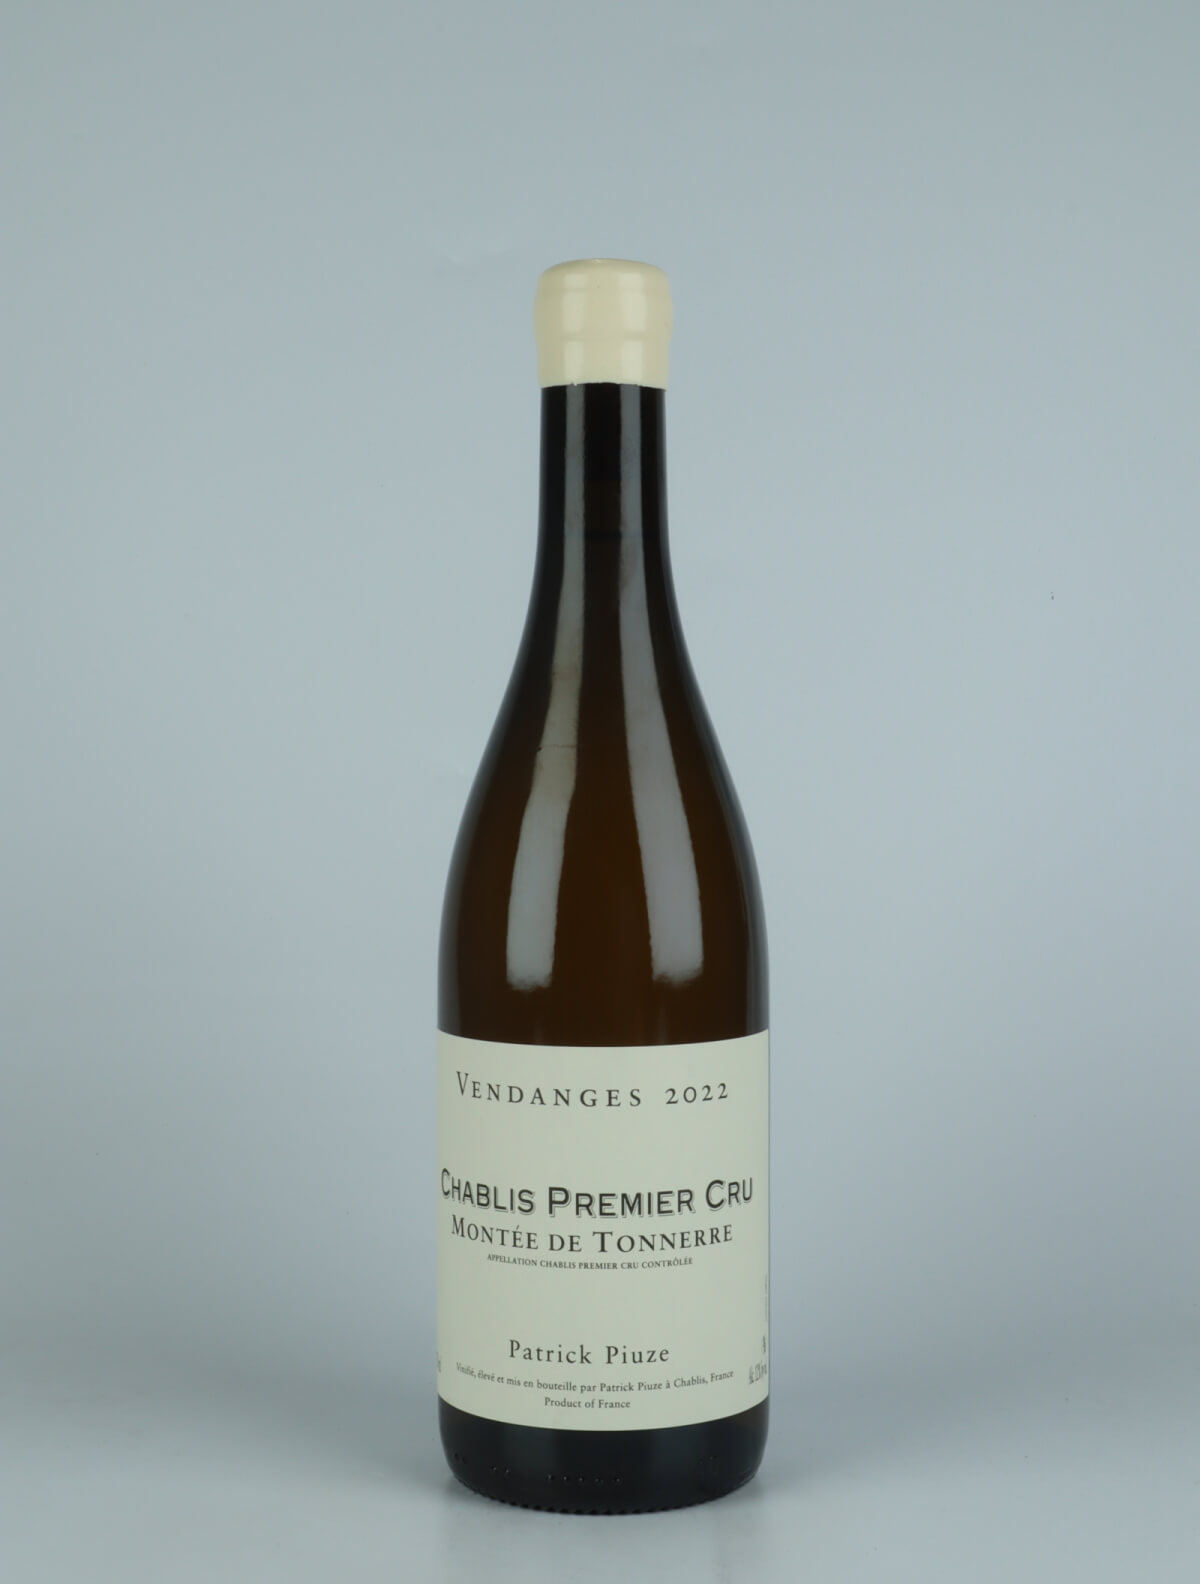 A bottle 2022 Chablis 1. Cru - Montée de Tonnerre White wine from Patrick Piuze, Burgundy in France